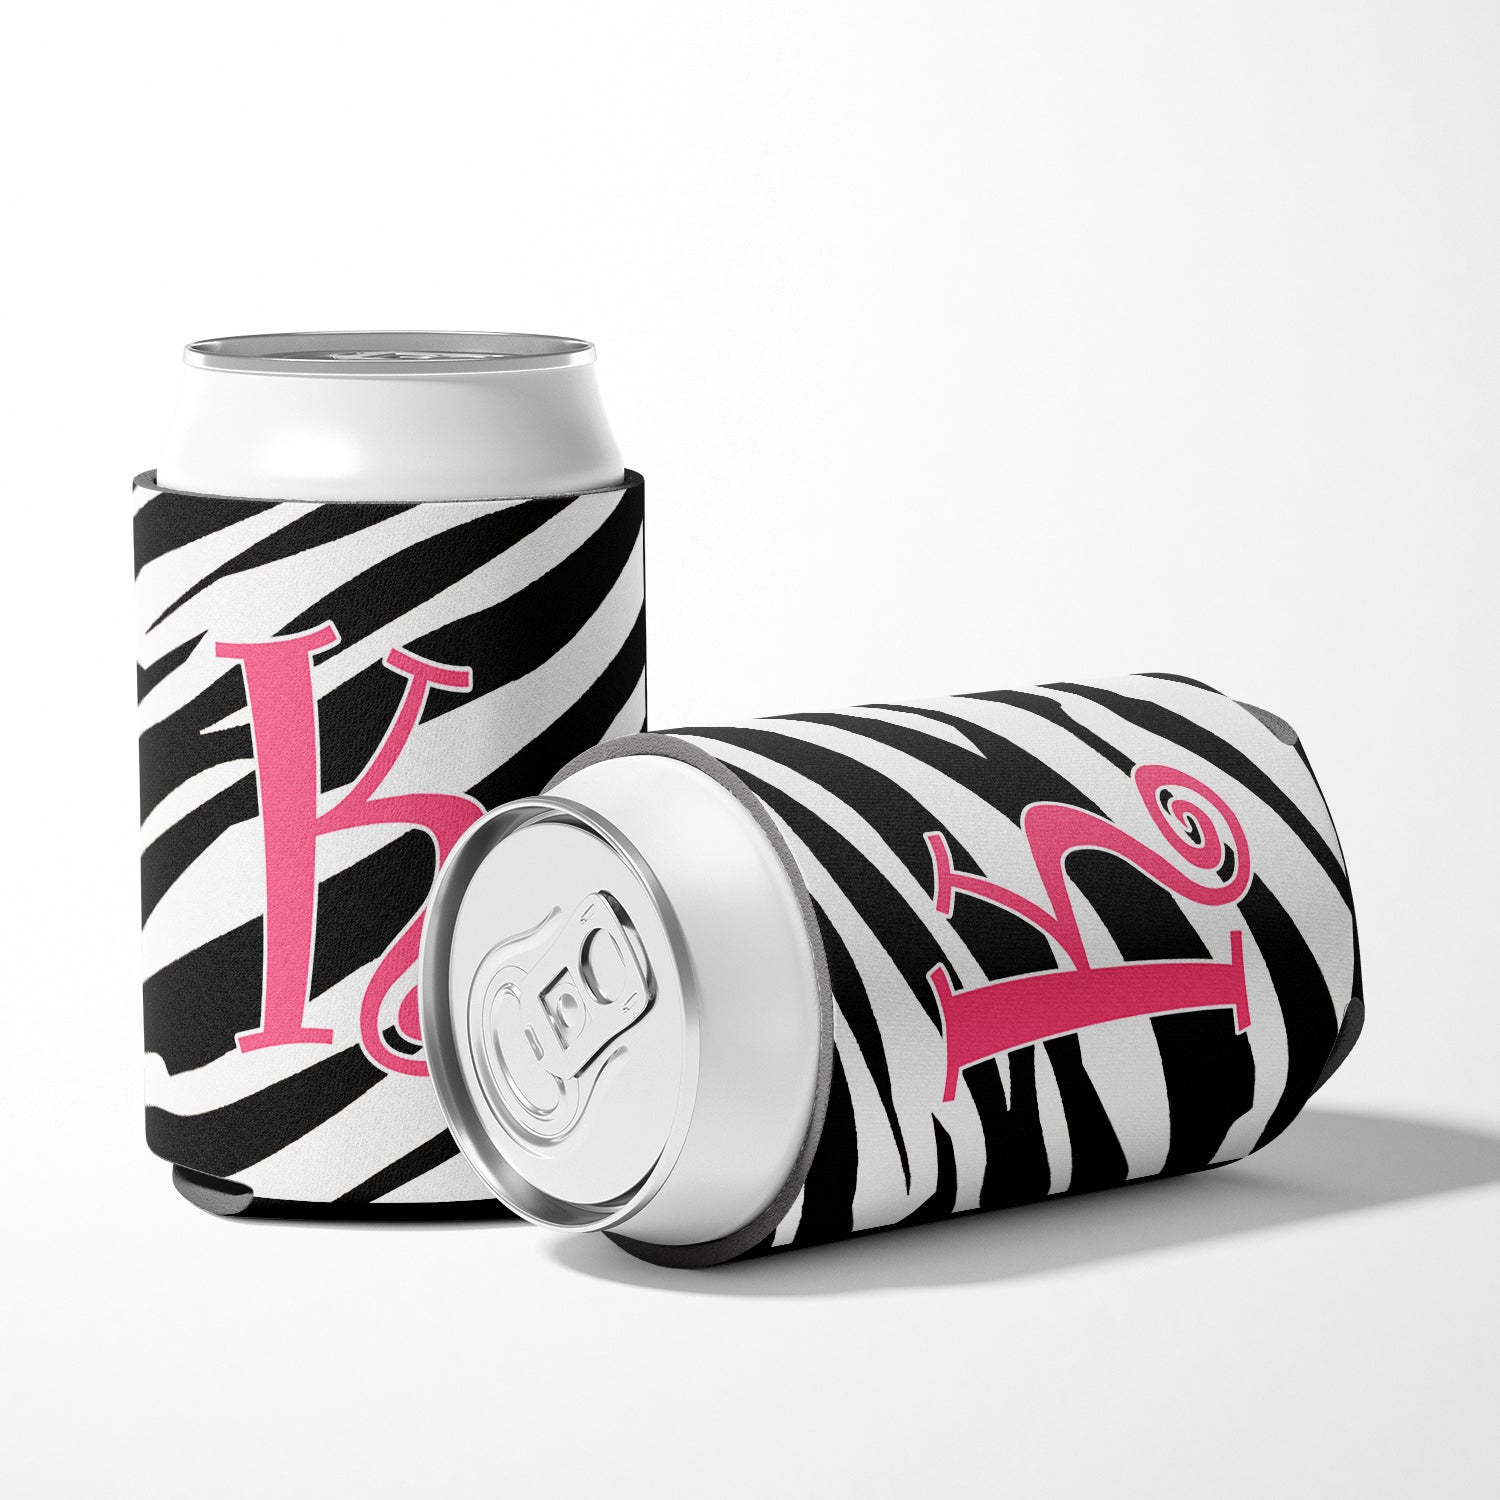 Letter K Initial Monogram - Zebra Stripe and Pink Can or Bottle Beverage Insulator Hugger